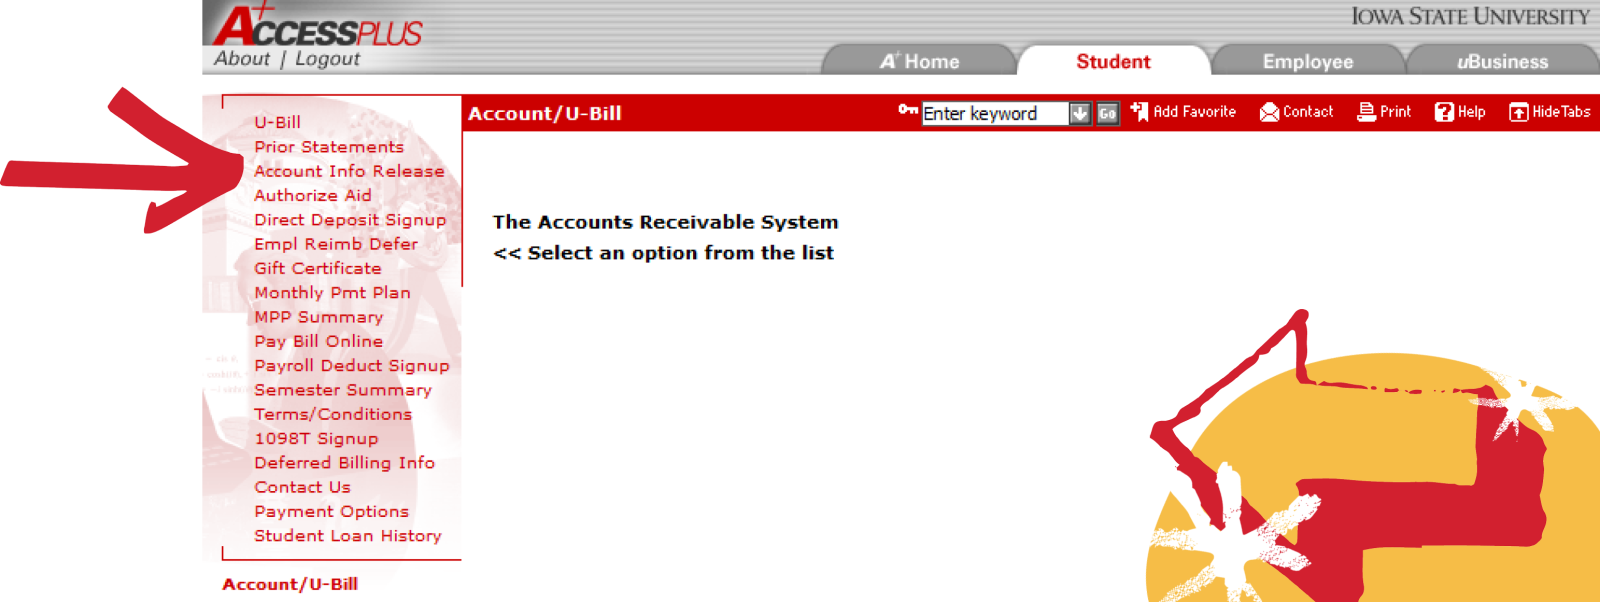 Select Account/U-Bill